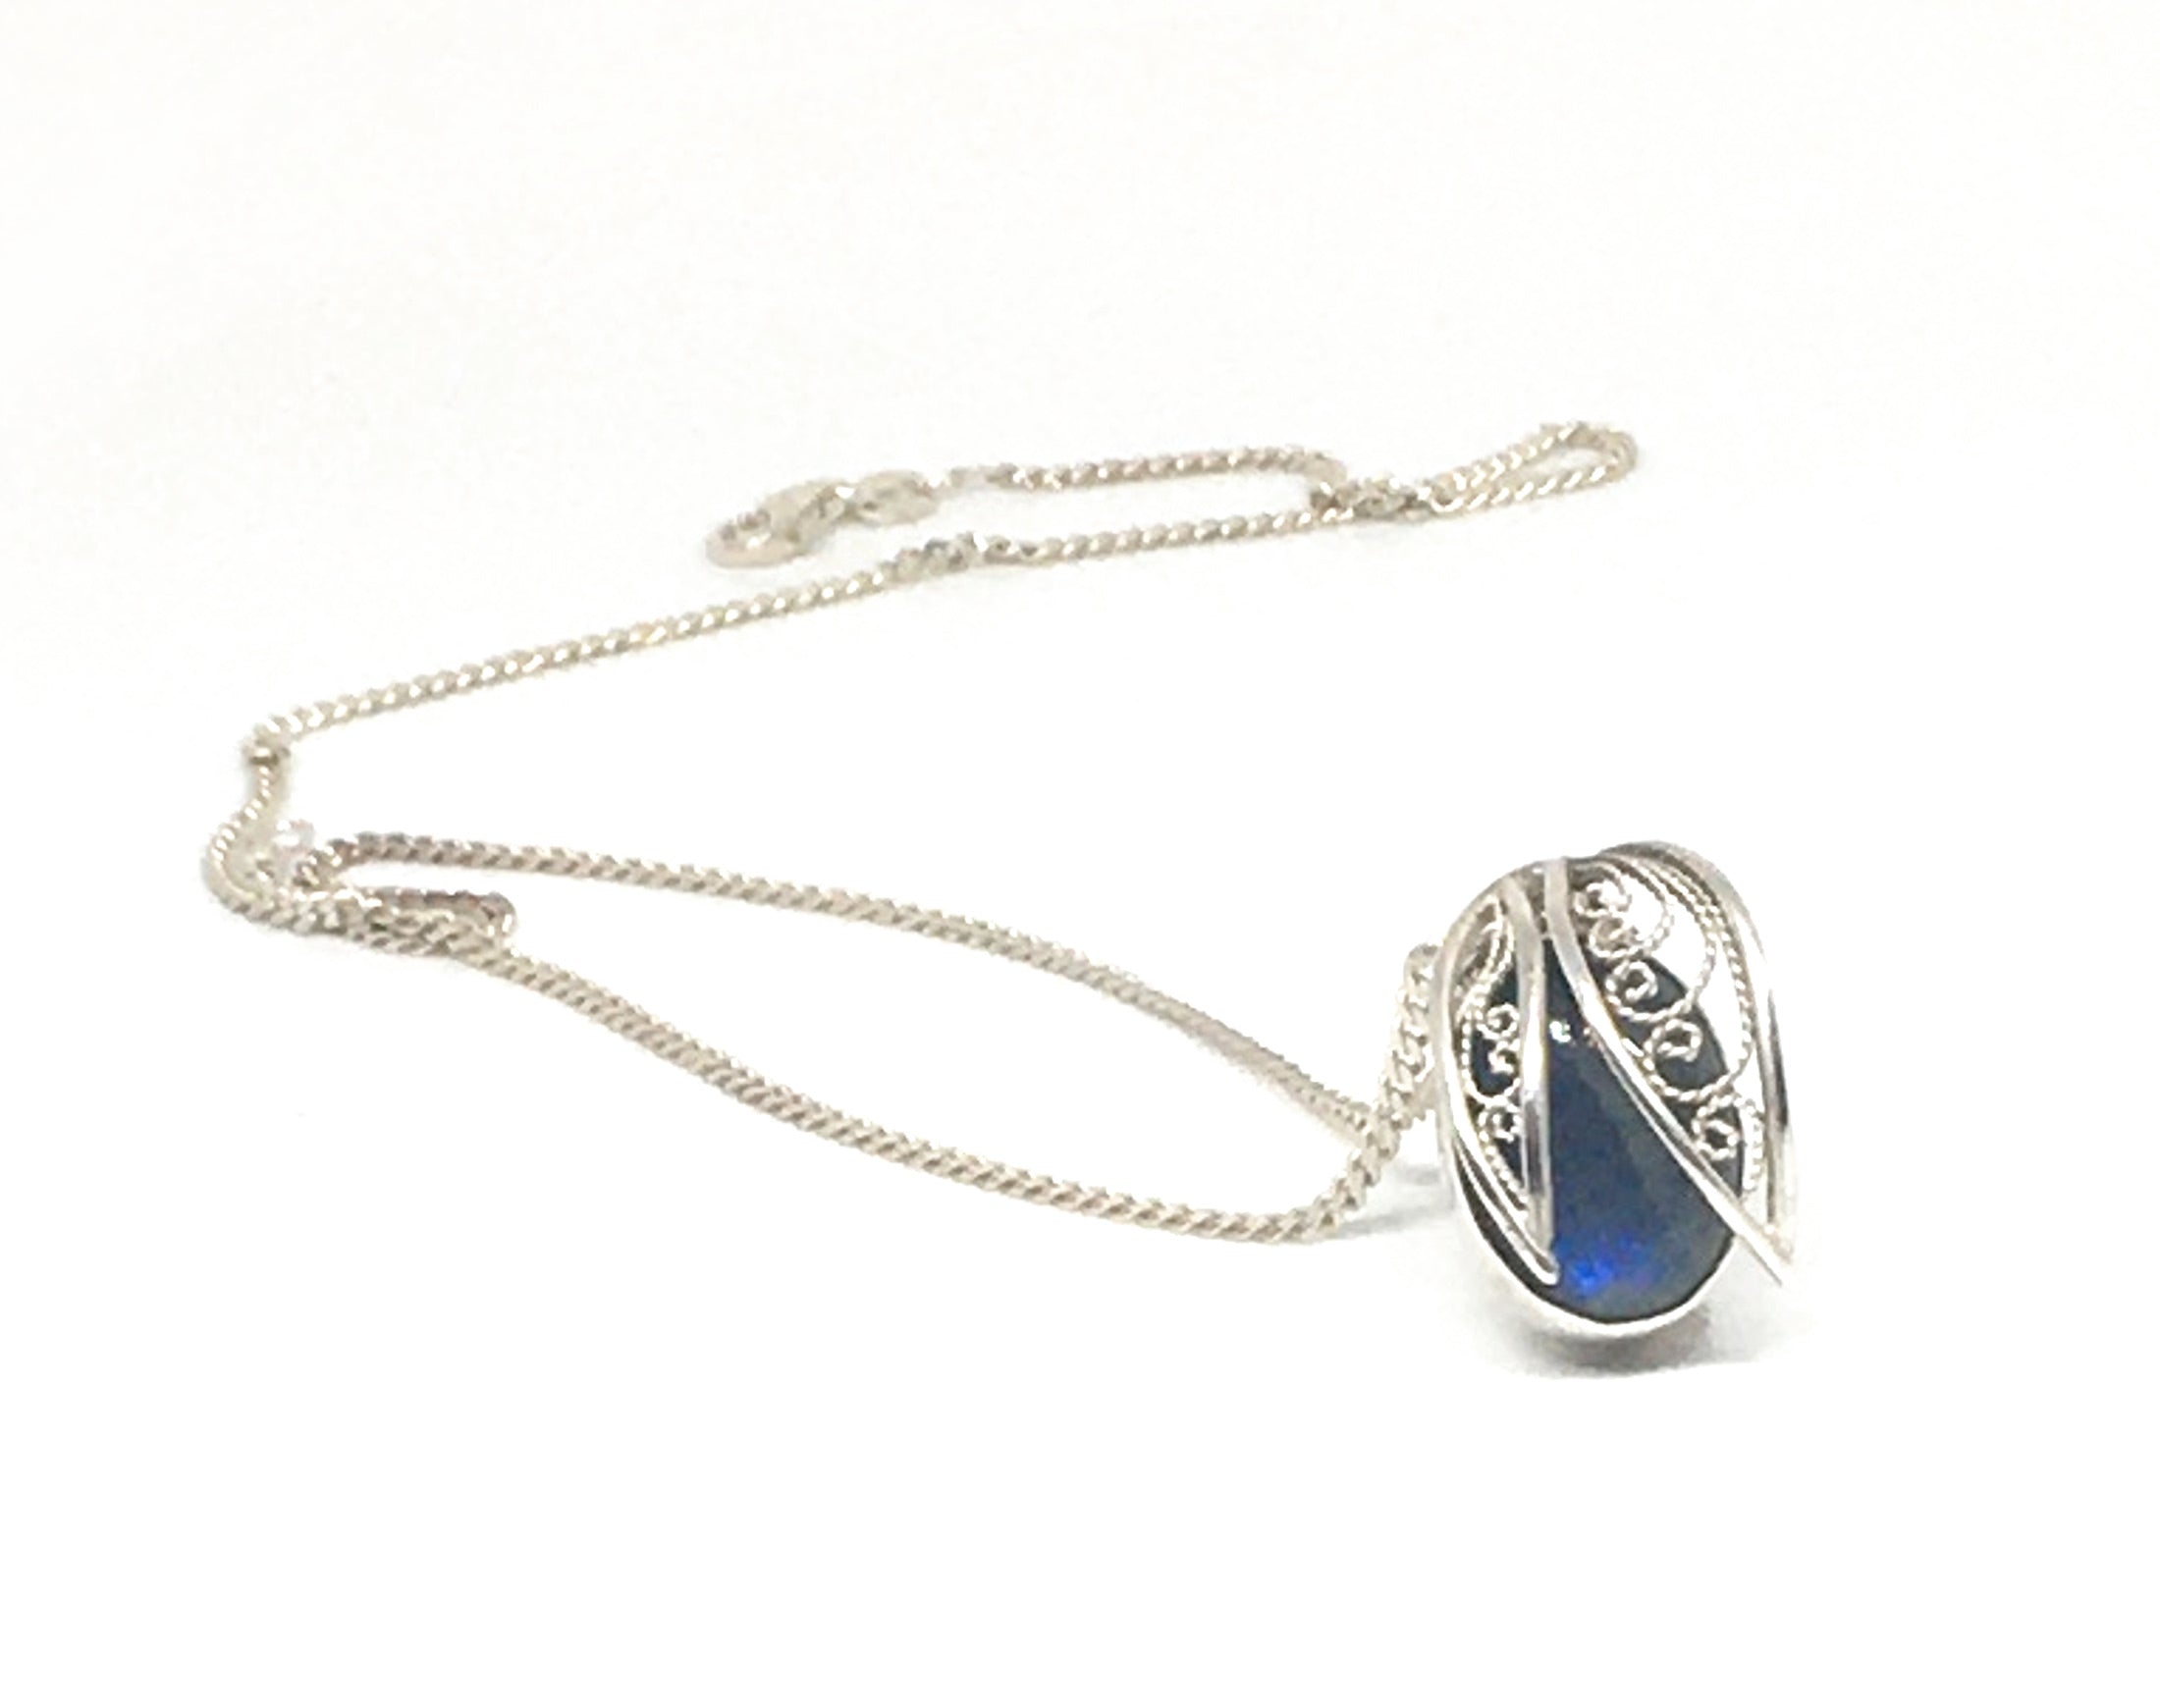 Handmade Silver Filigree and Labradorite Gemstone Pendant Necklace - Hidden Gem Series I